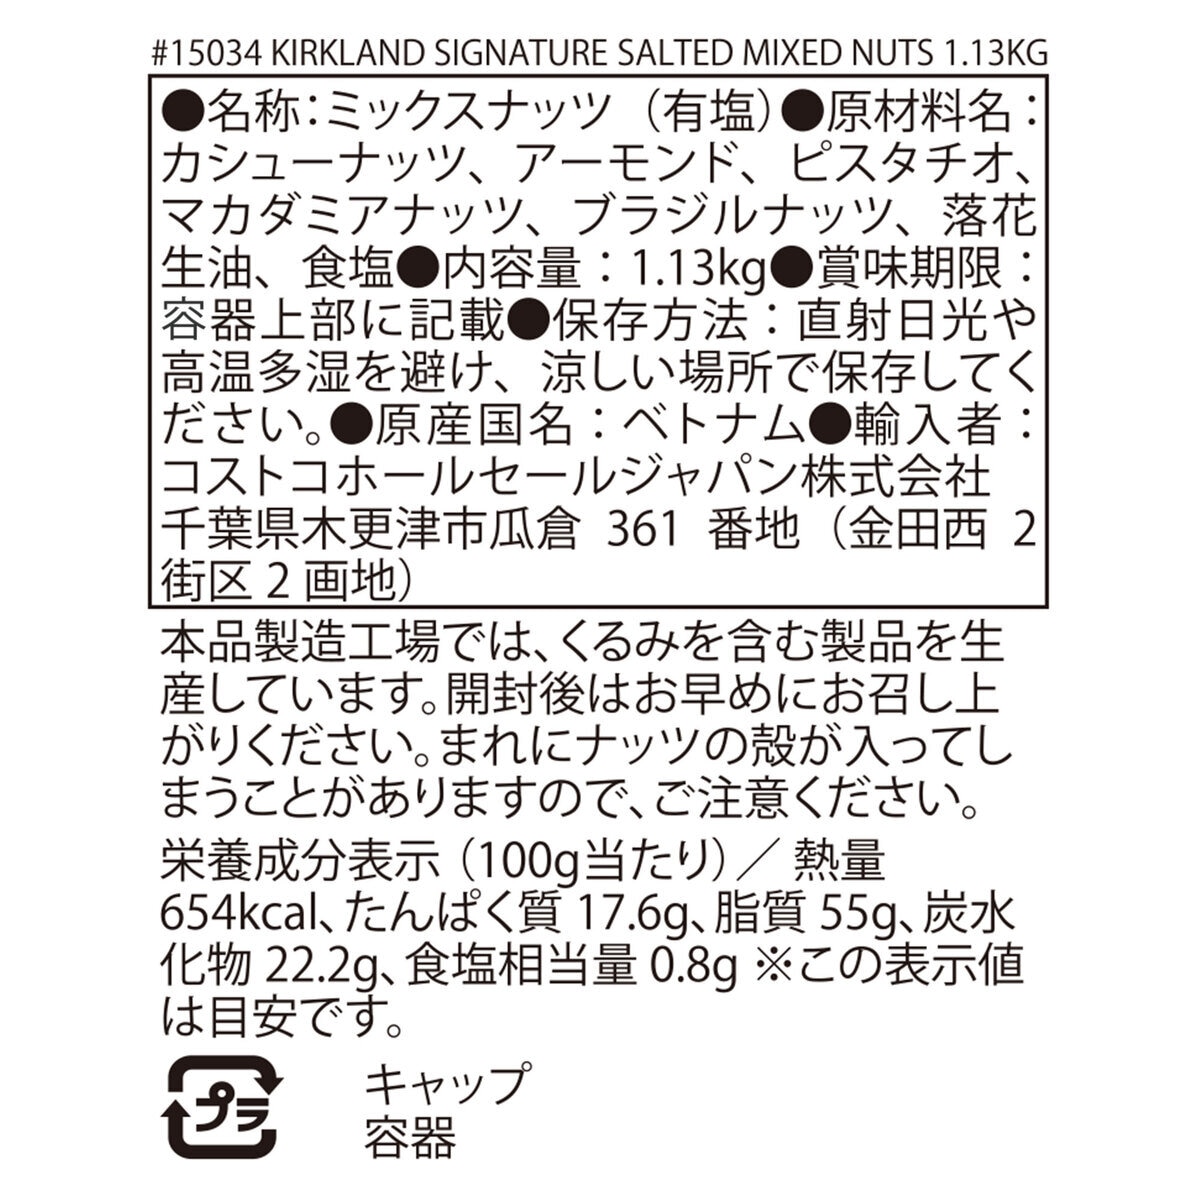 Costco　カークランドシグネチャー　Japan　ミックス・ナッツ　1.13kg